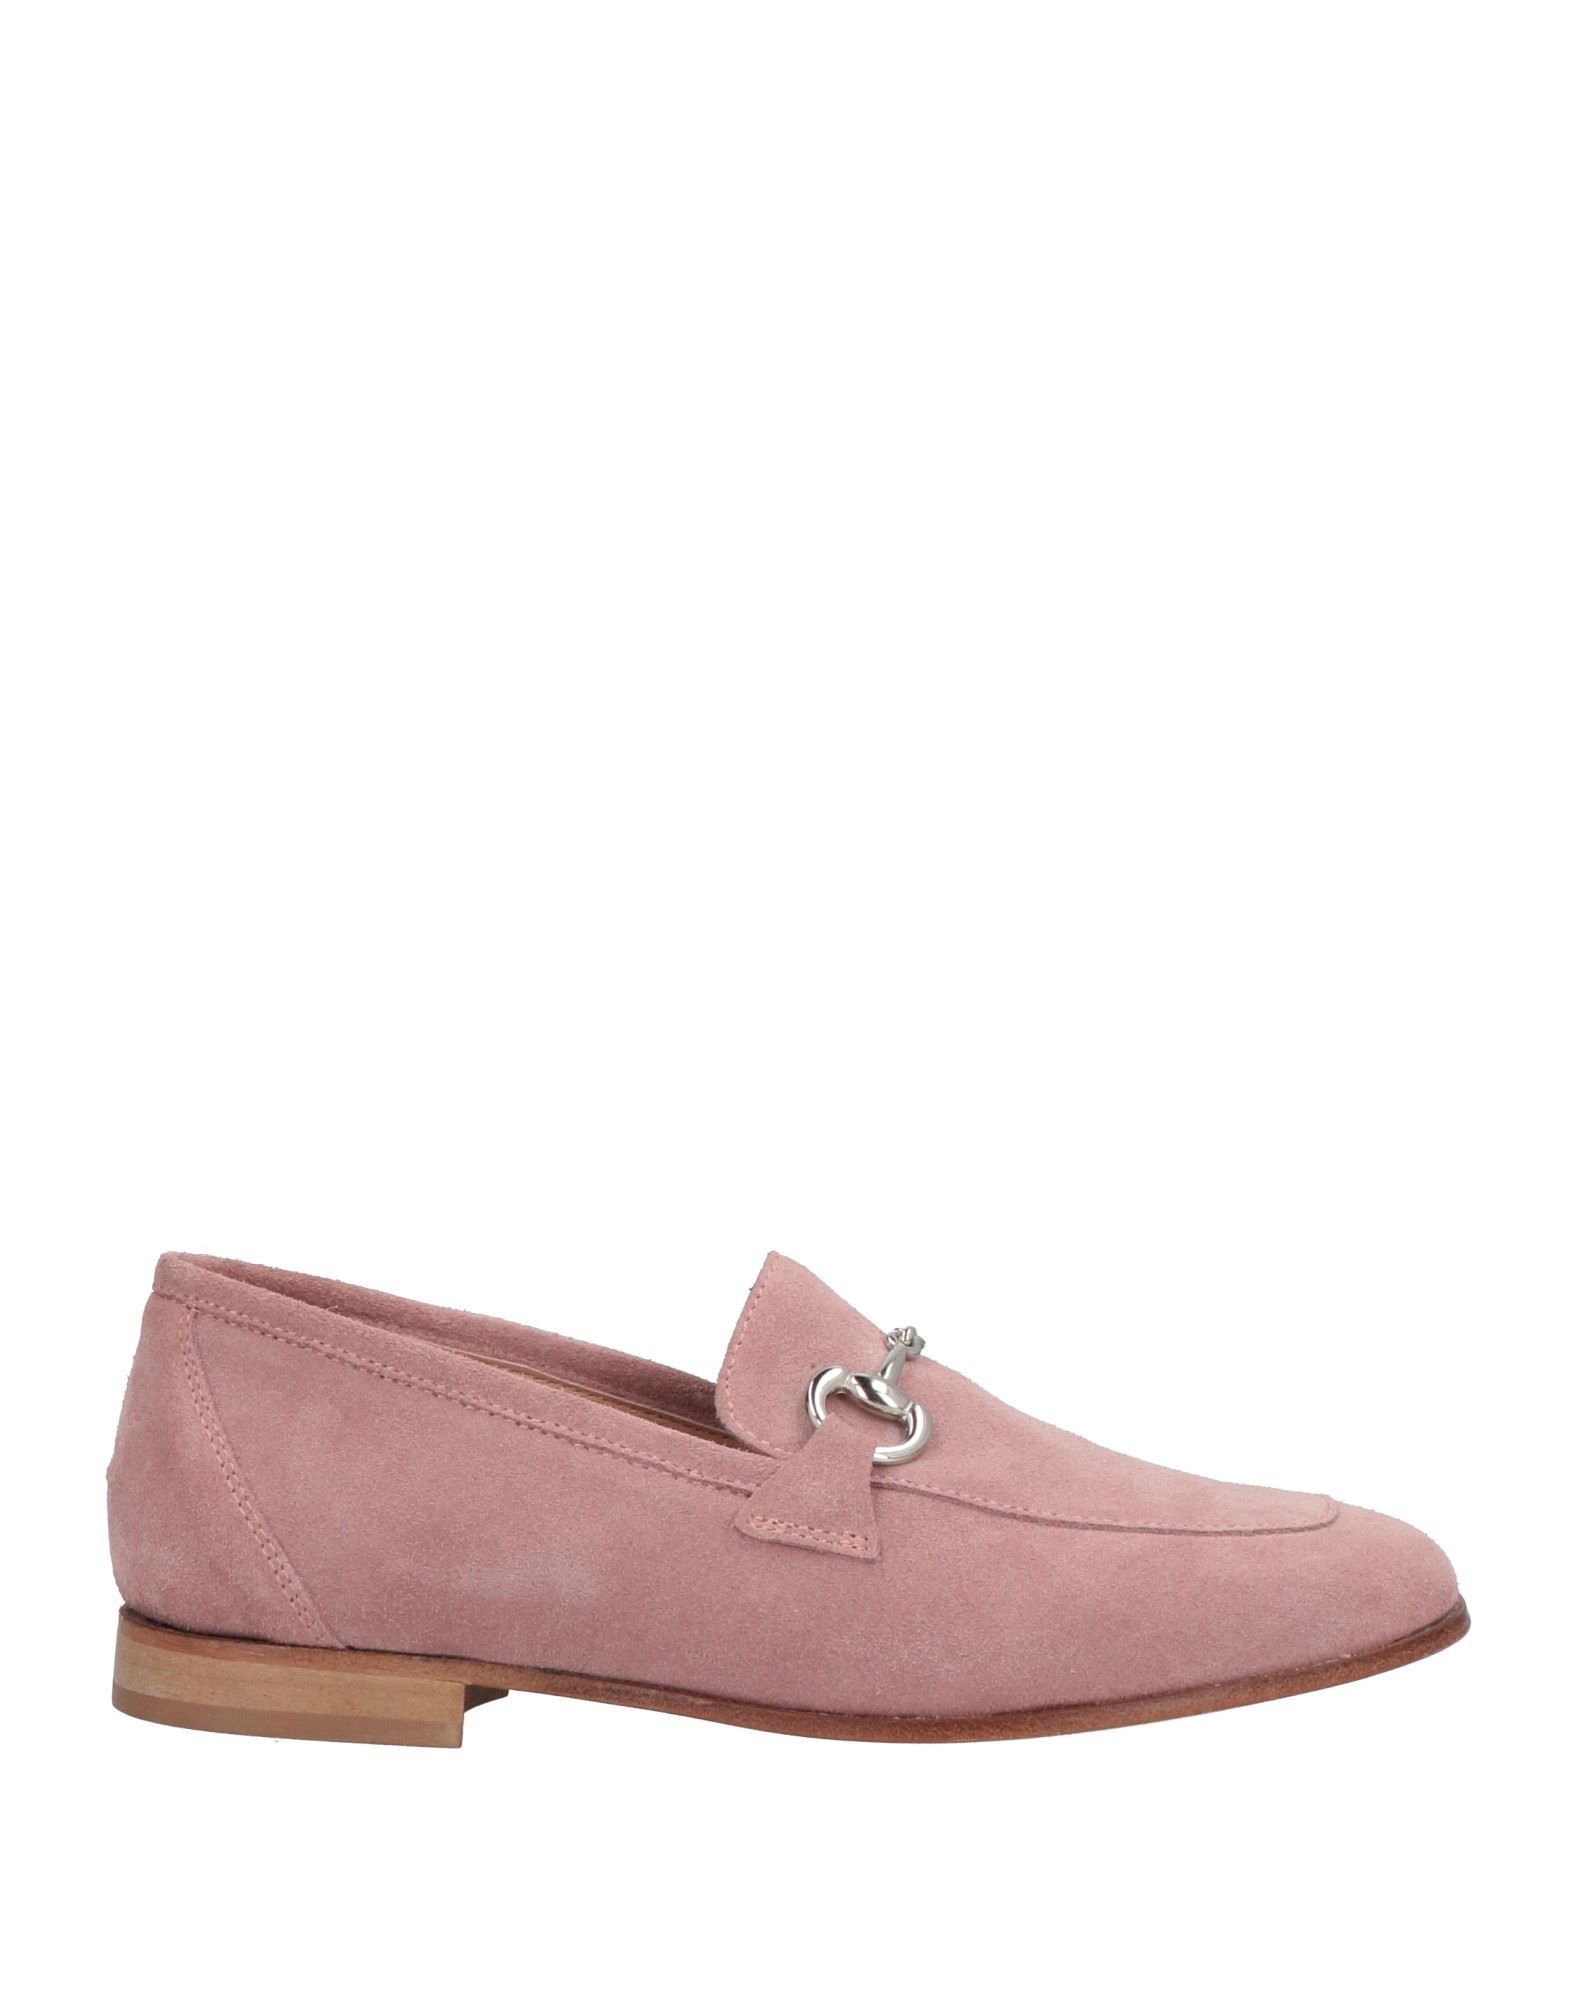 Nana' Woman Loafers Pastel Pink Size 6 Leather